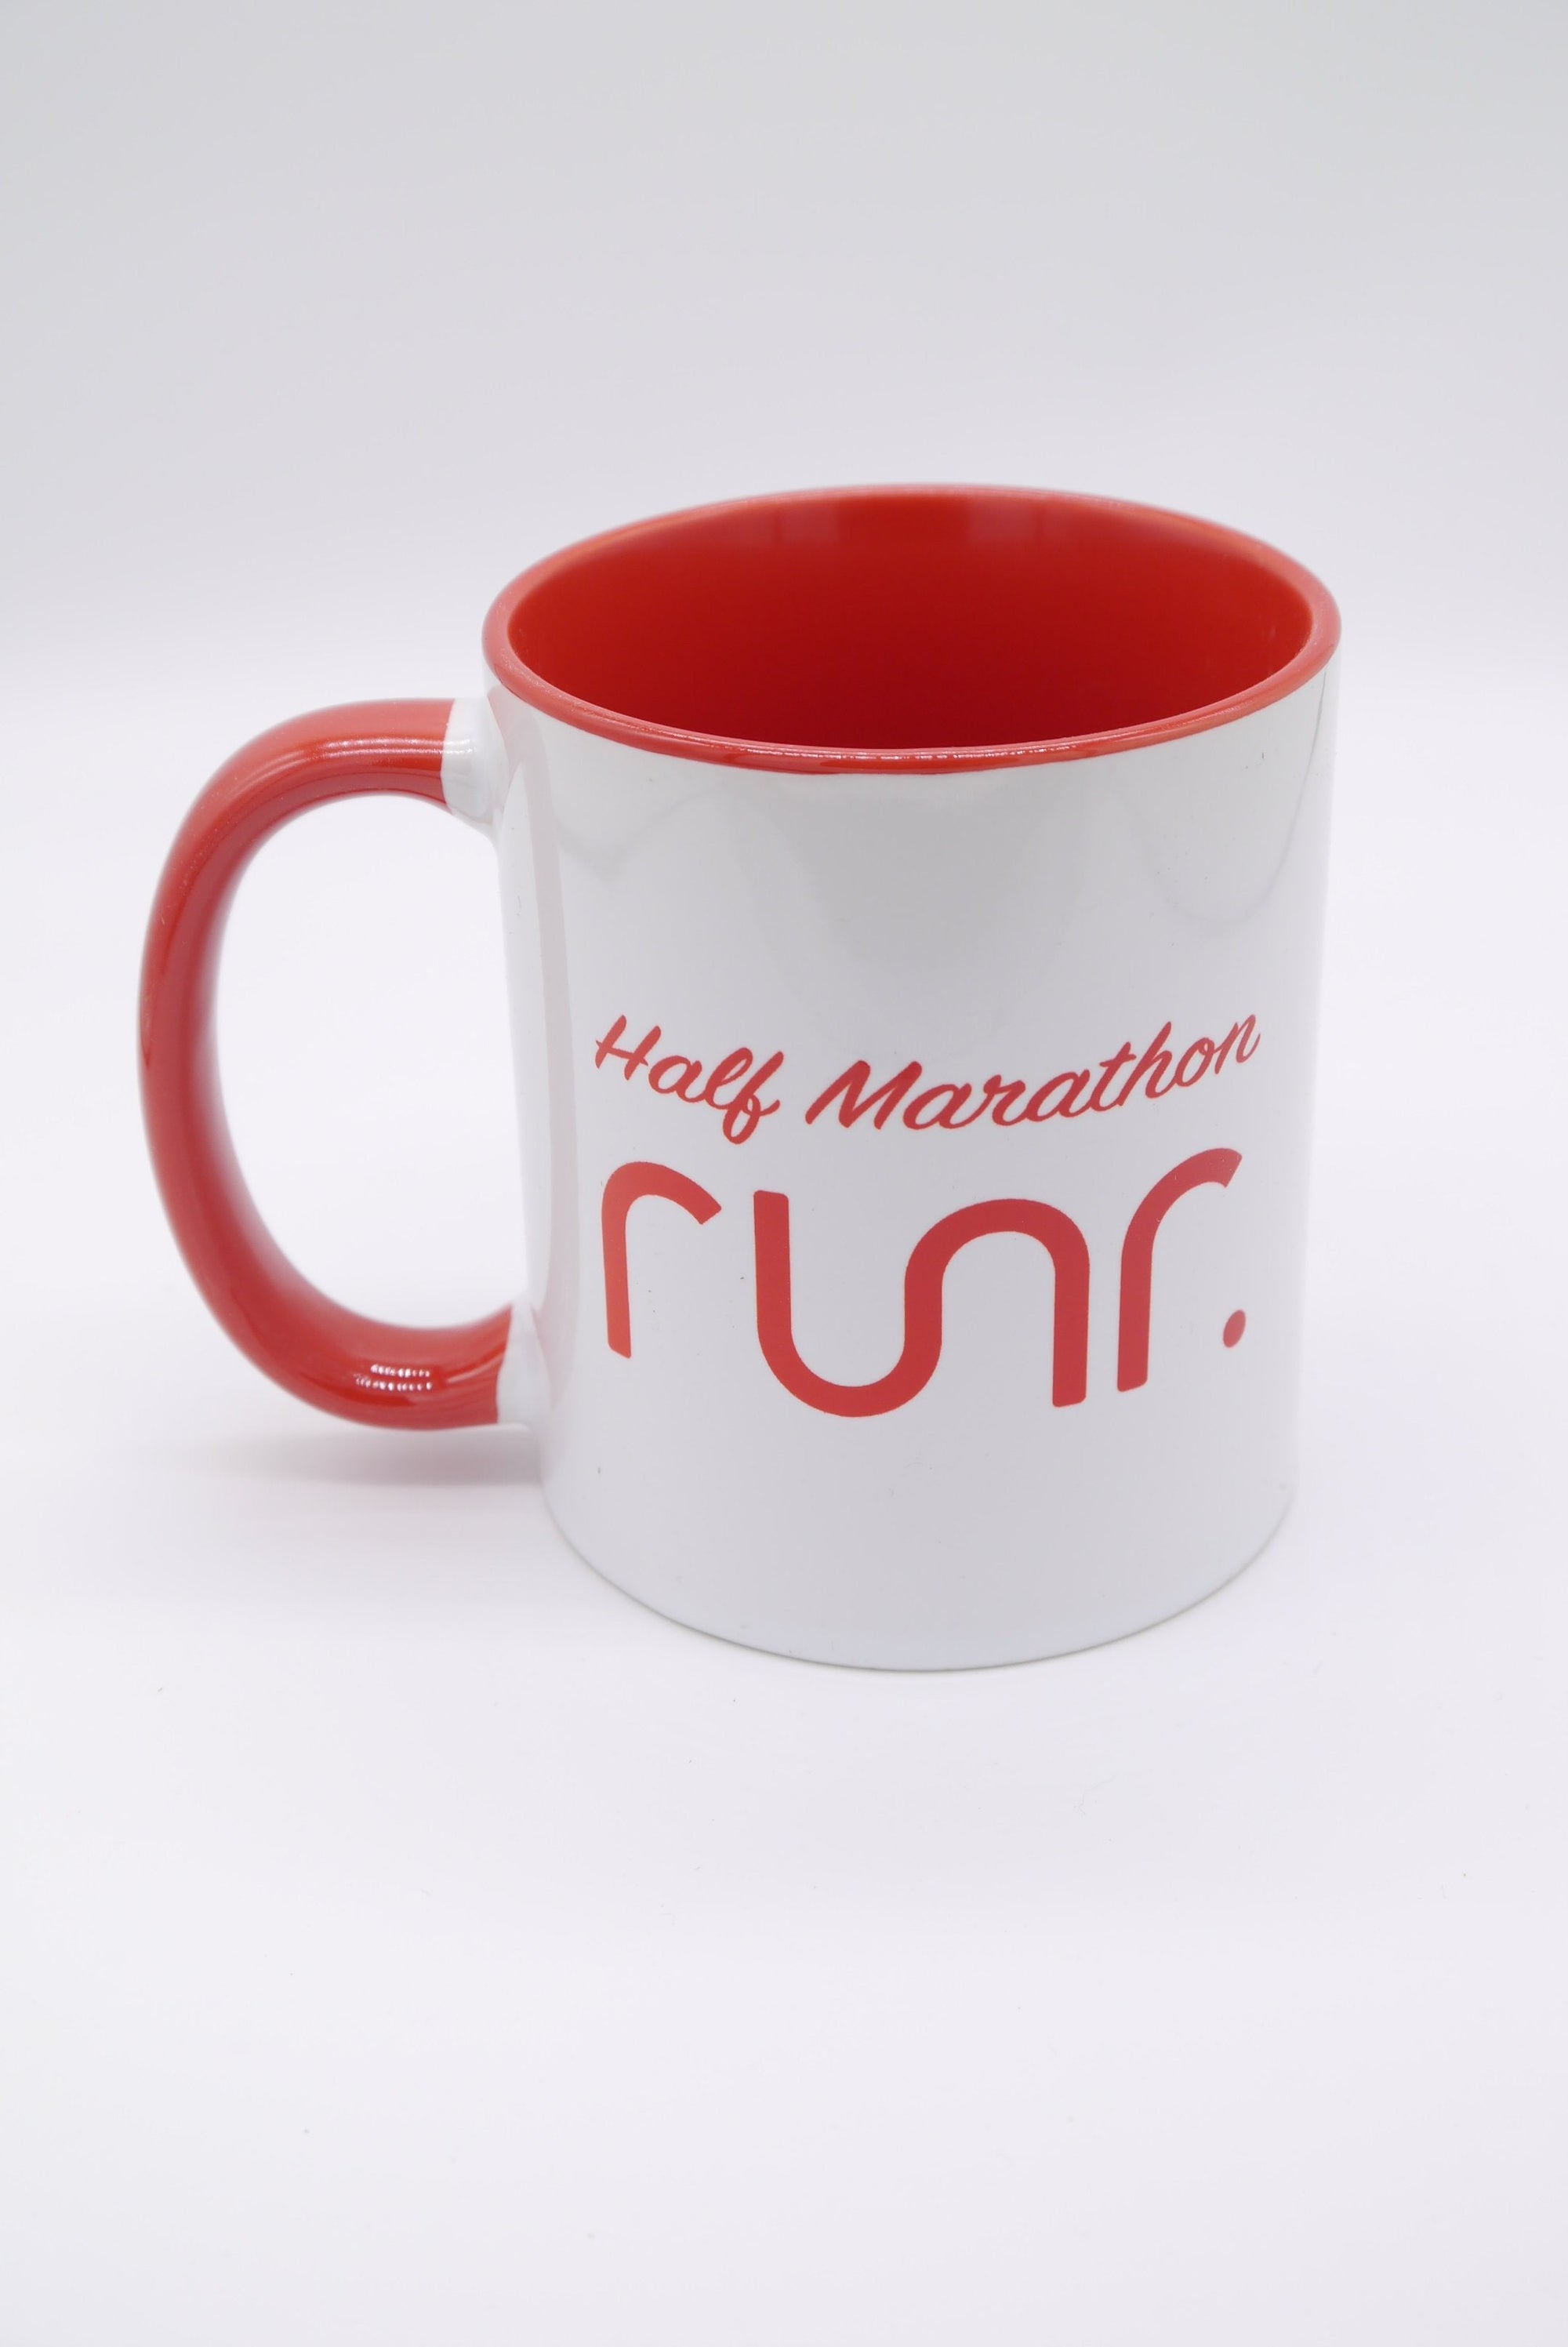 Half Marathon Runr Mug in red